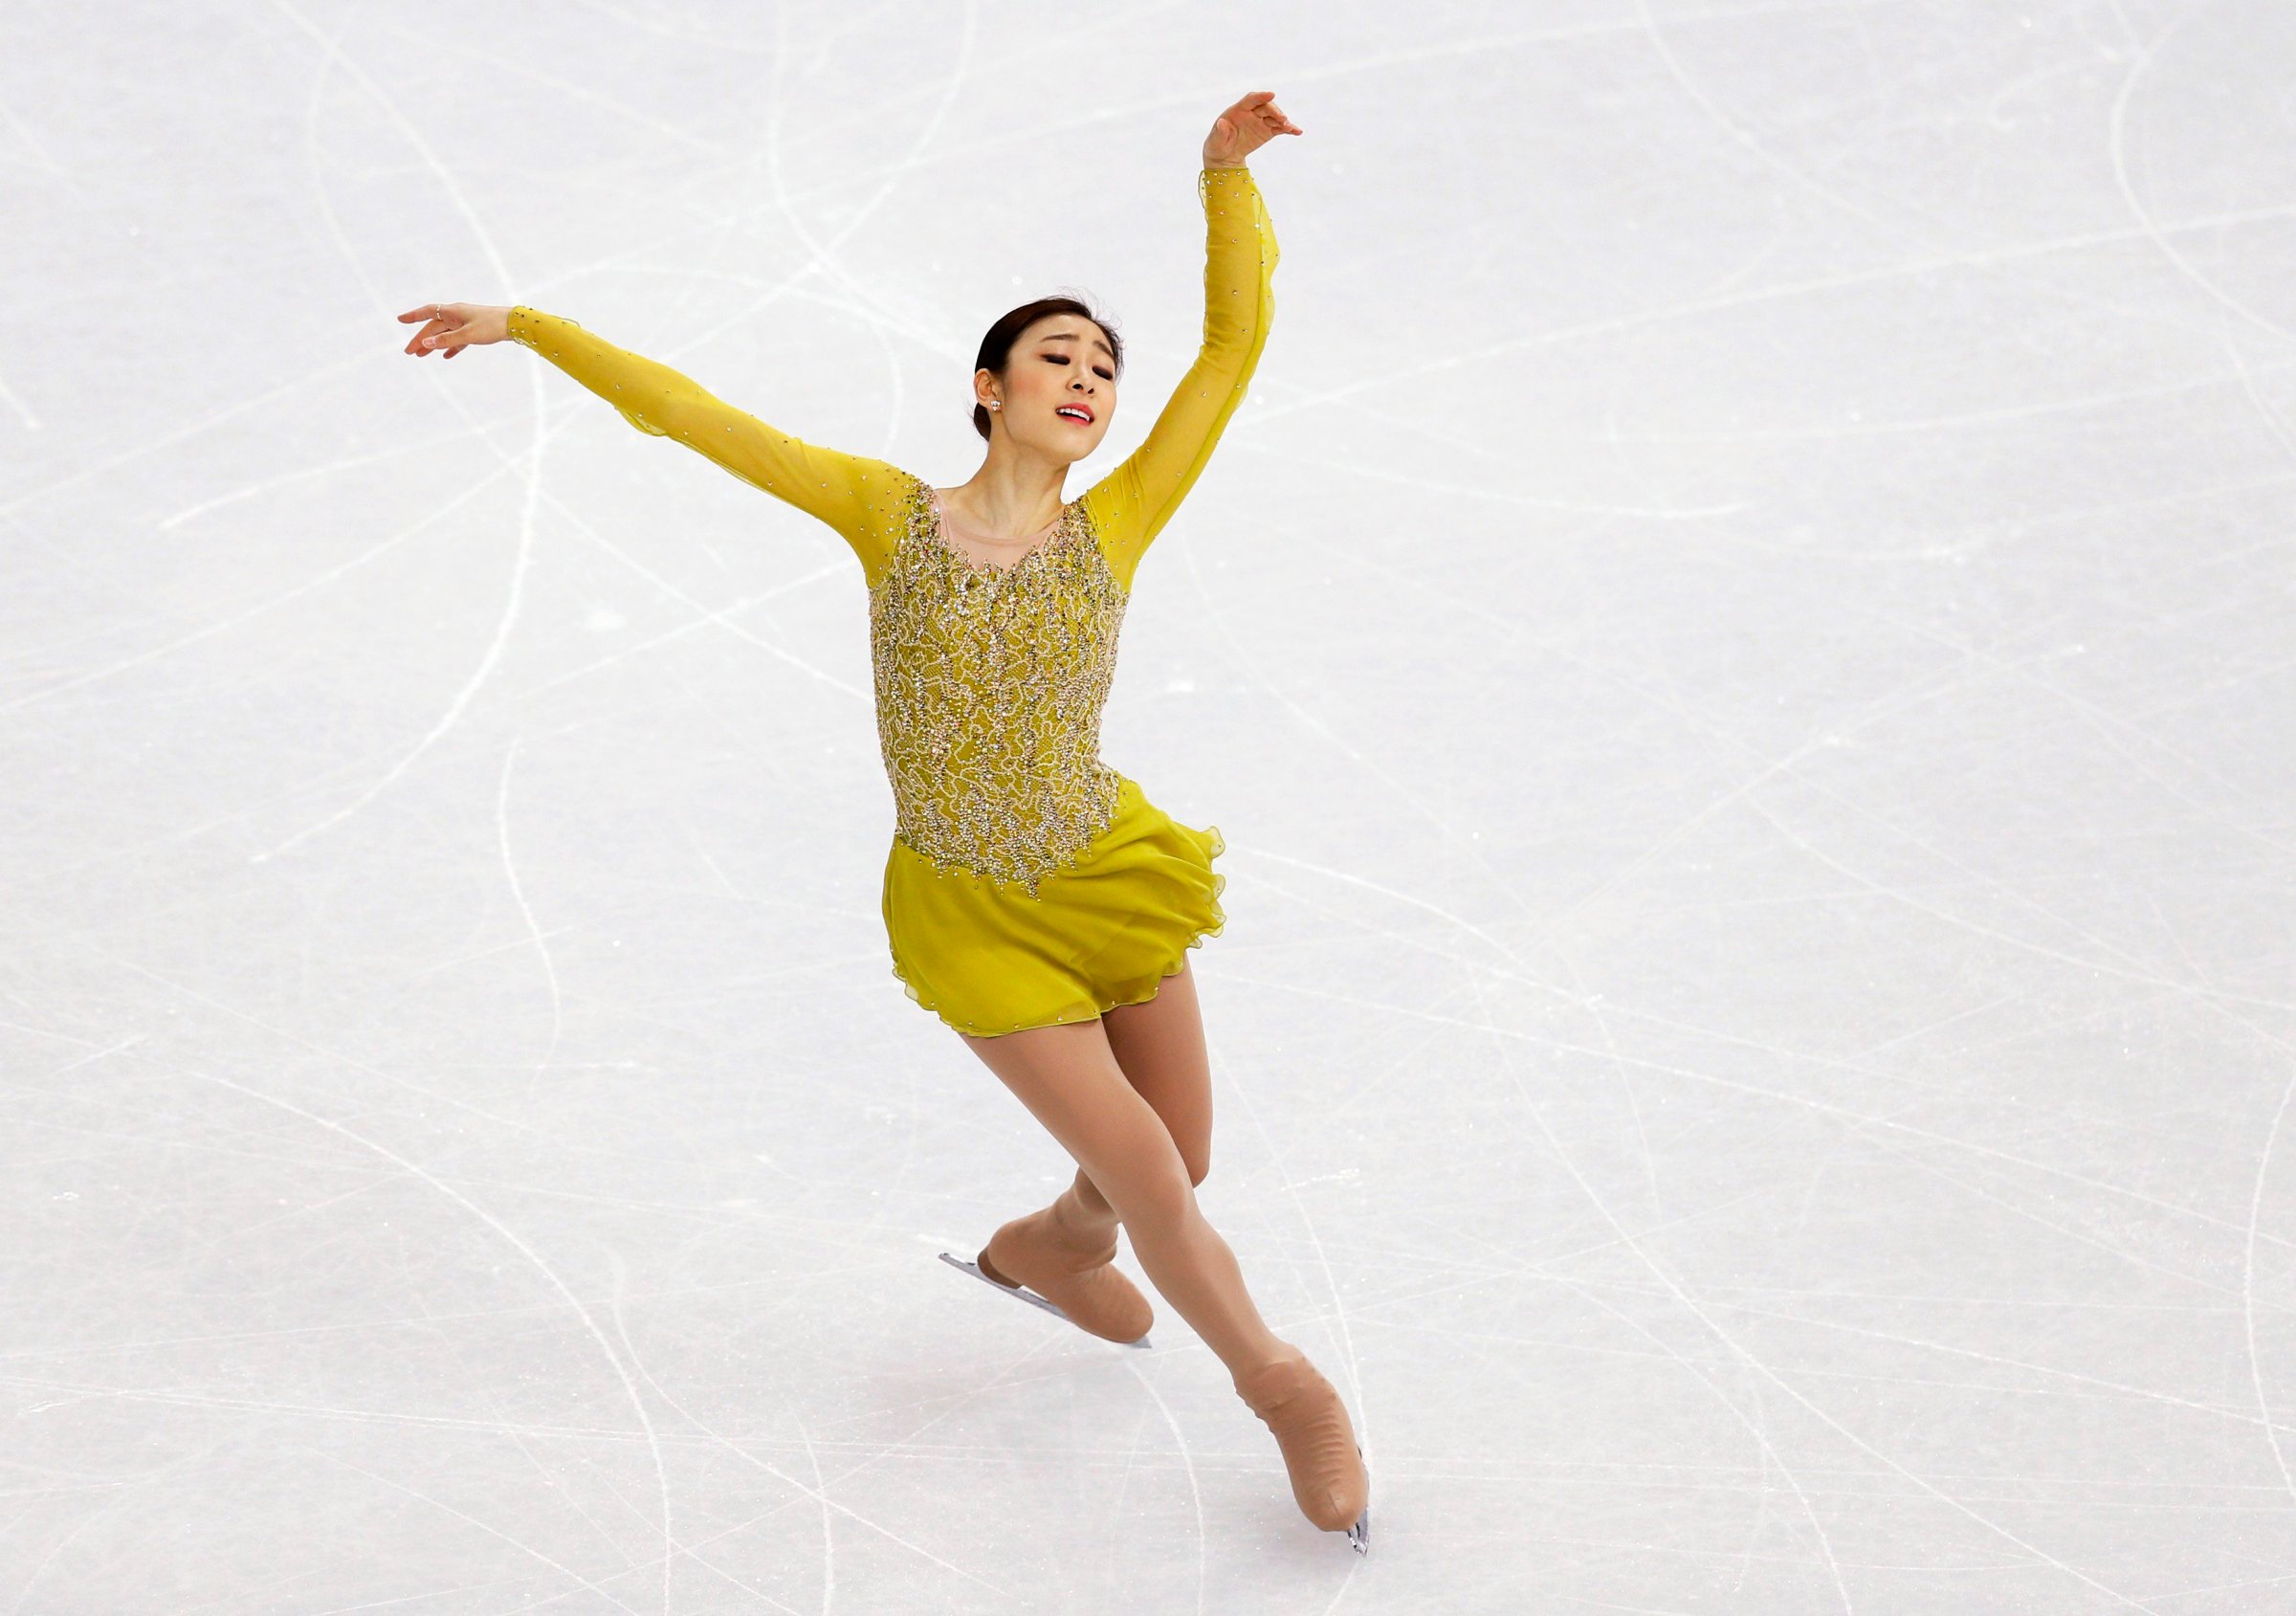 Korea's Yuna Kim competes during the Figure Skating Women's Short Program.